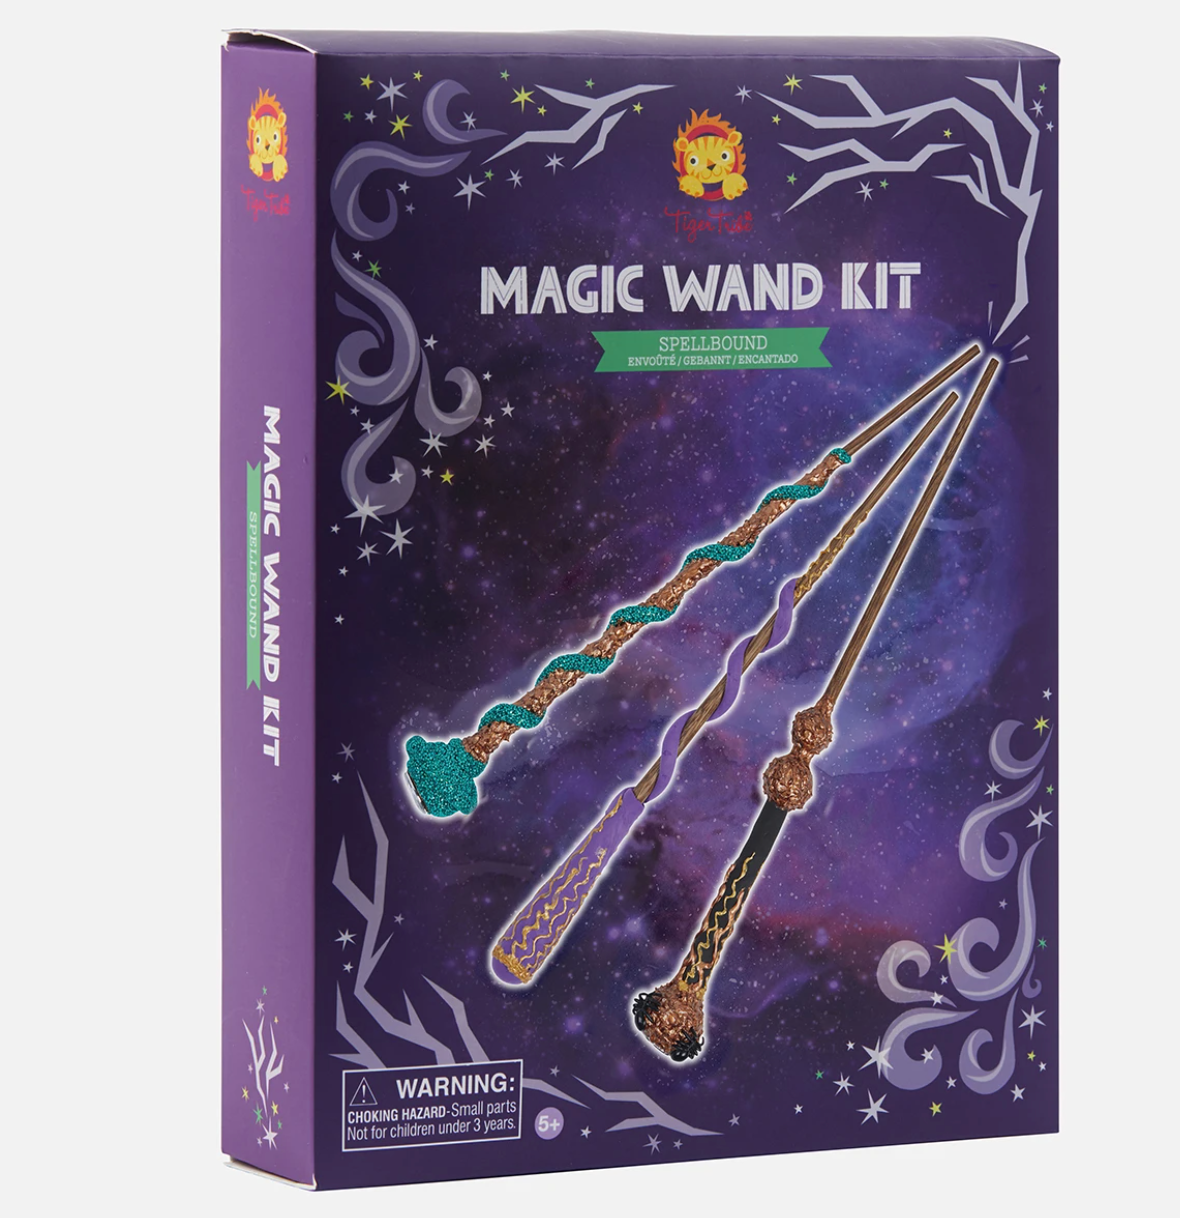 Magic Wand Kit by Schylling # 60633